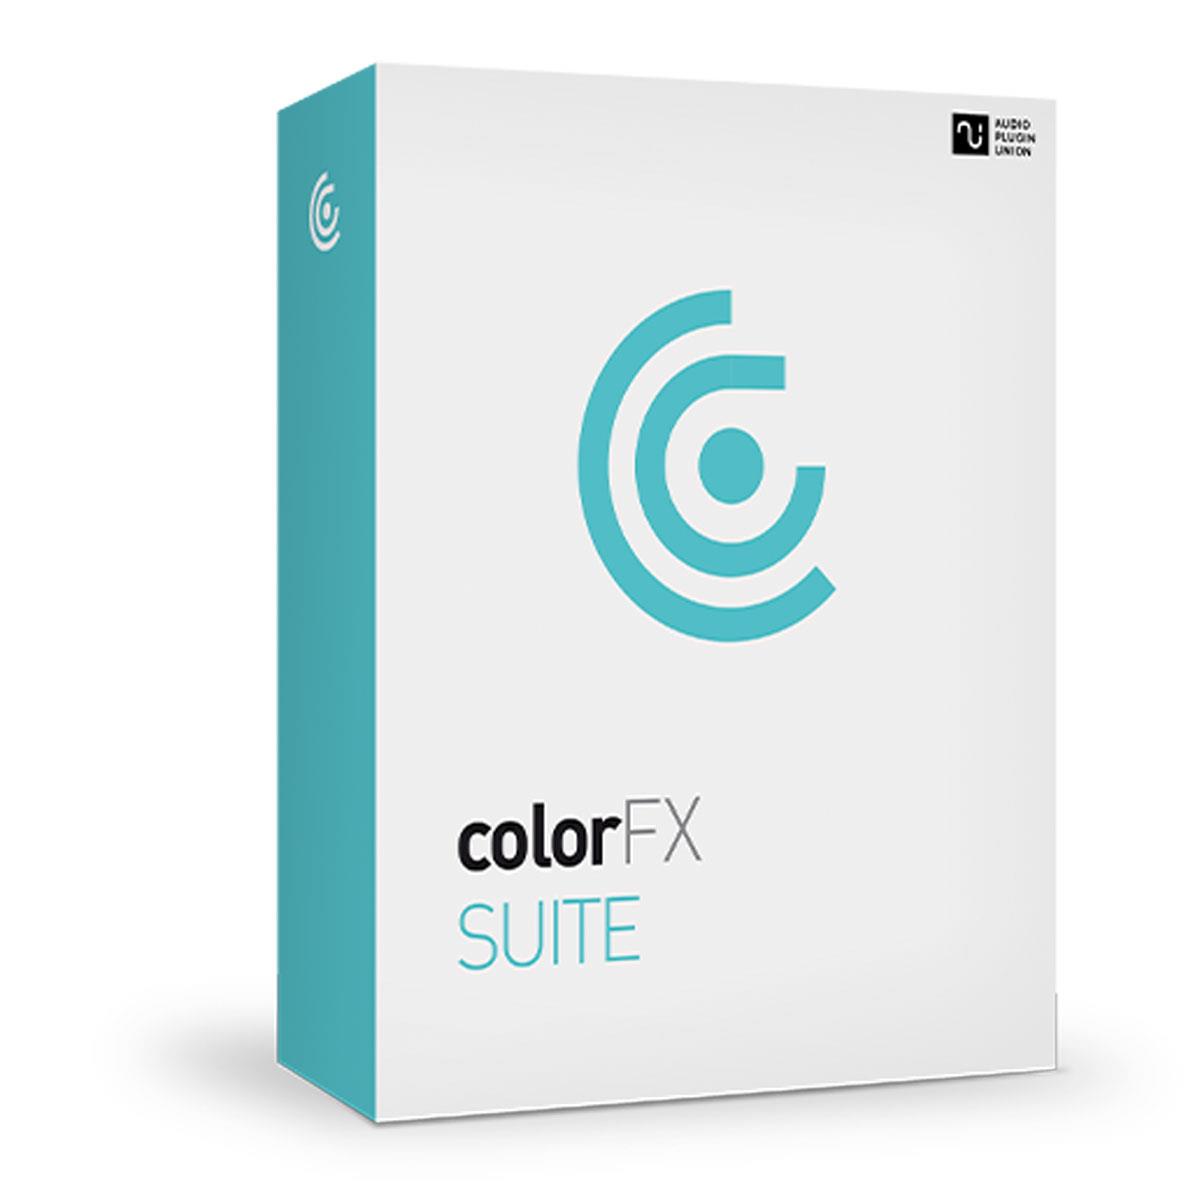 Image of Magix colorFX Suite Software